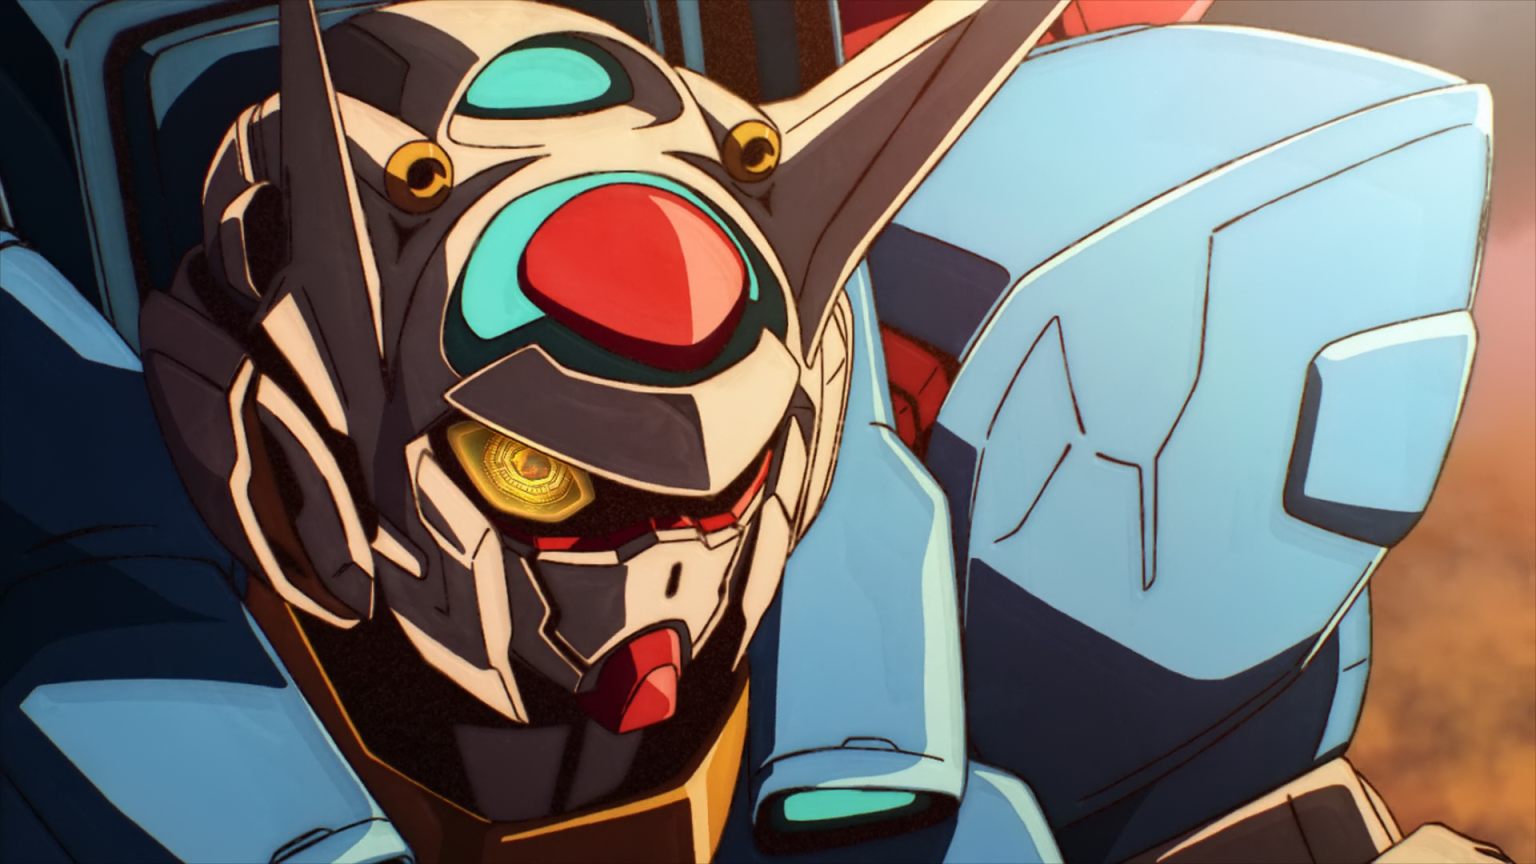 Mobile Suit Gundam Creator Yoshiyuki Tomino Vows To "Crush" Demon Slayer and Neon Genesis ...